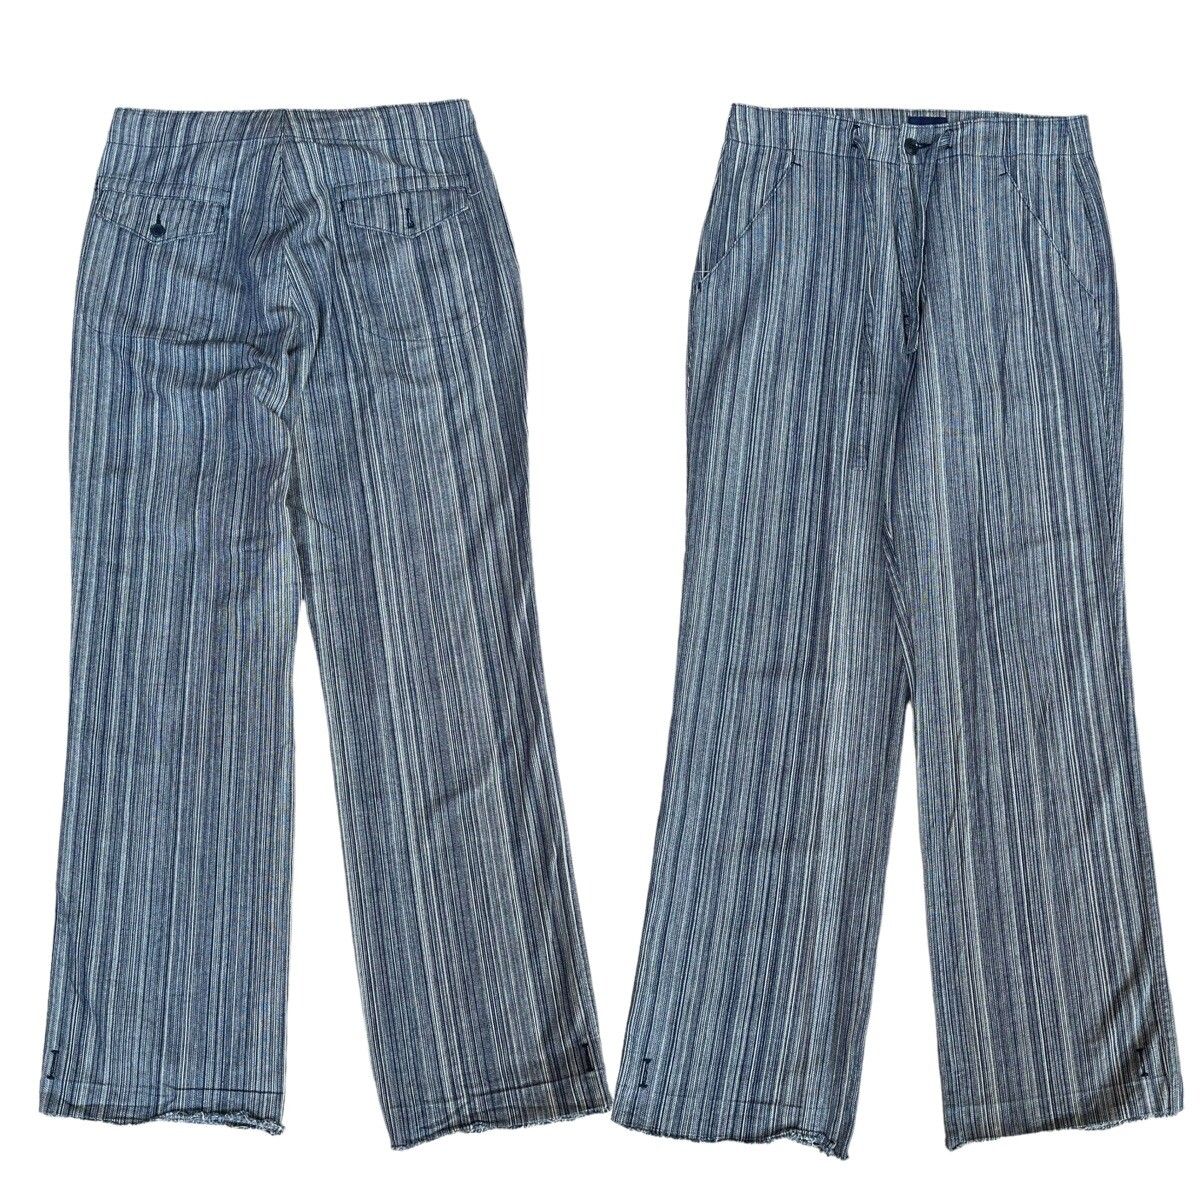 Beams Japan Inspired Kapital Style Pants Size 31 - 1